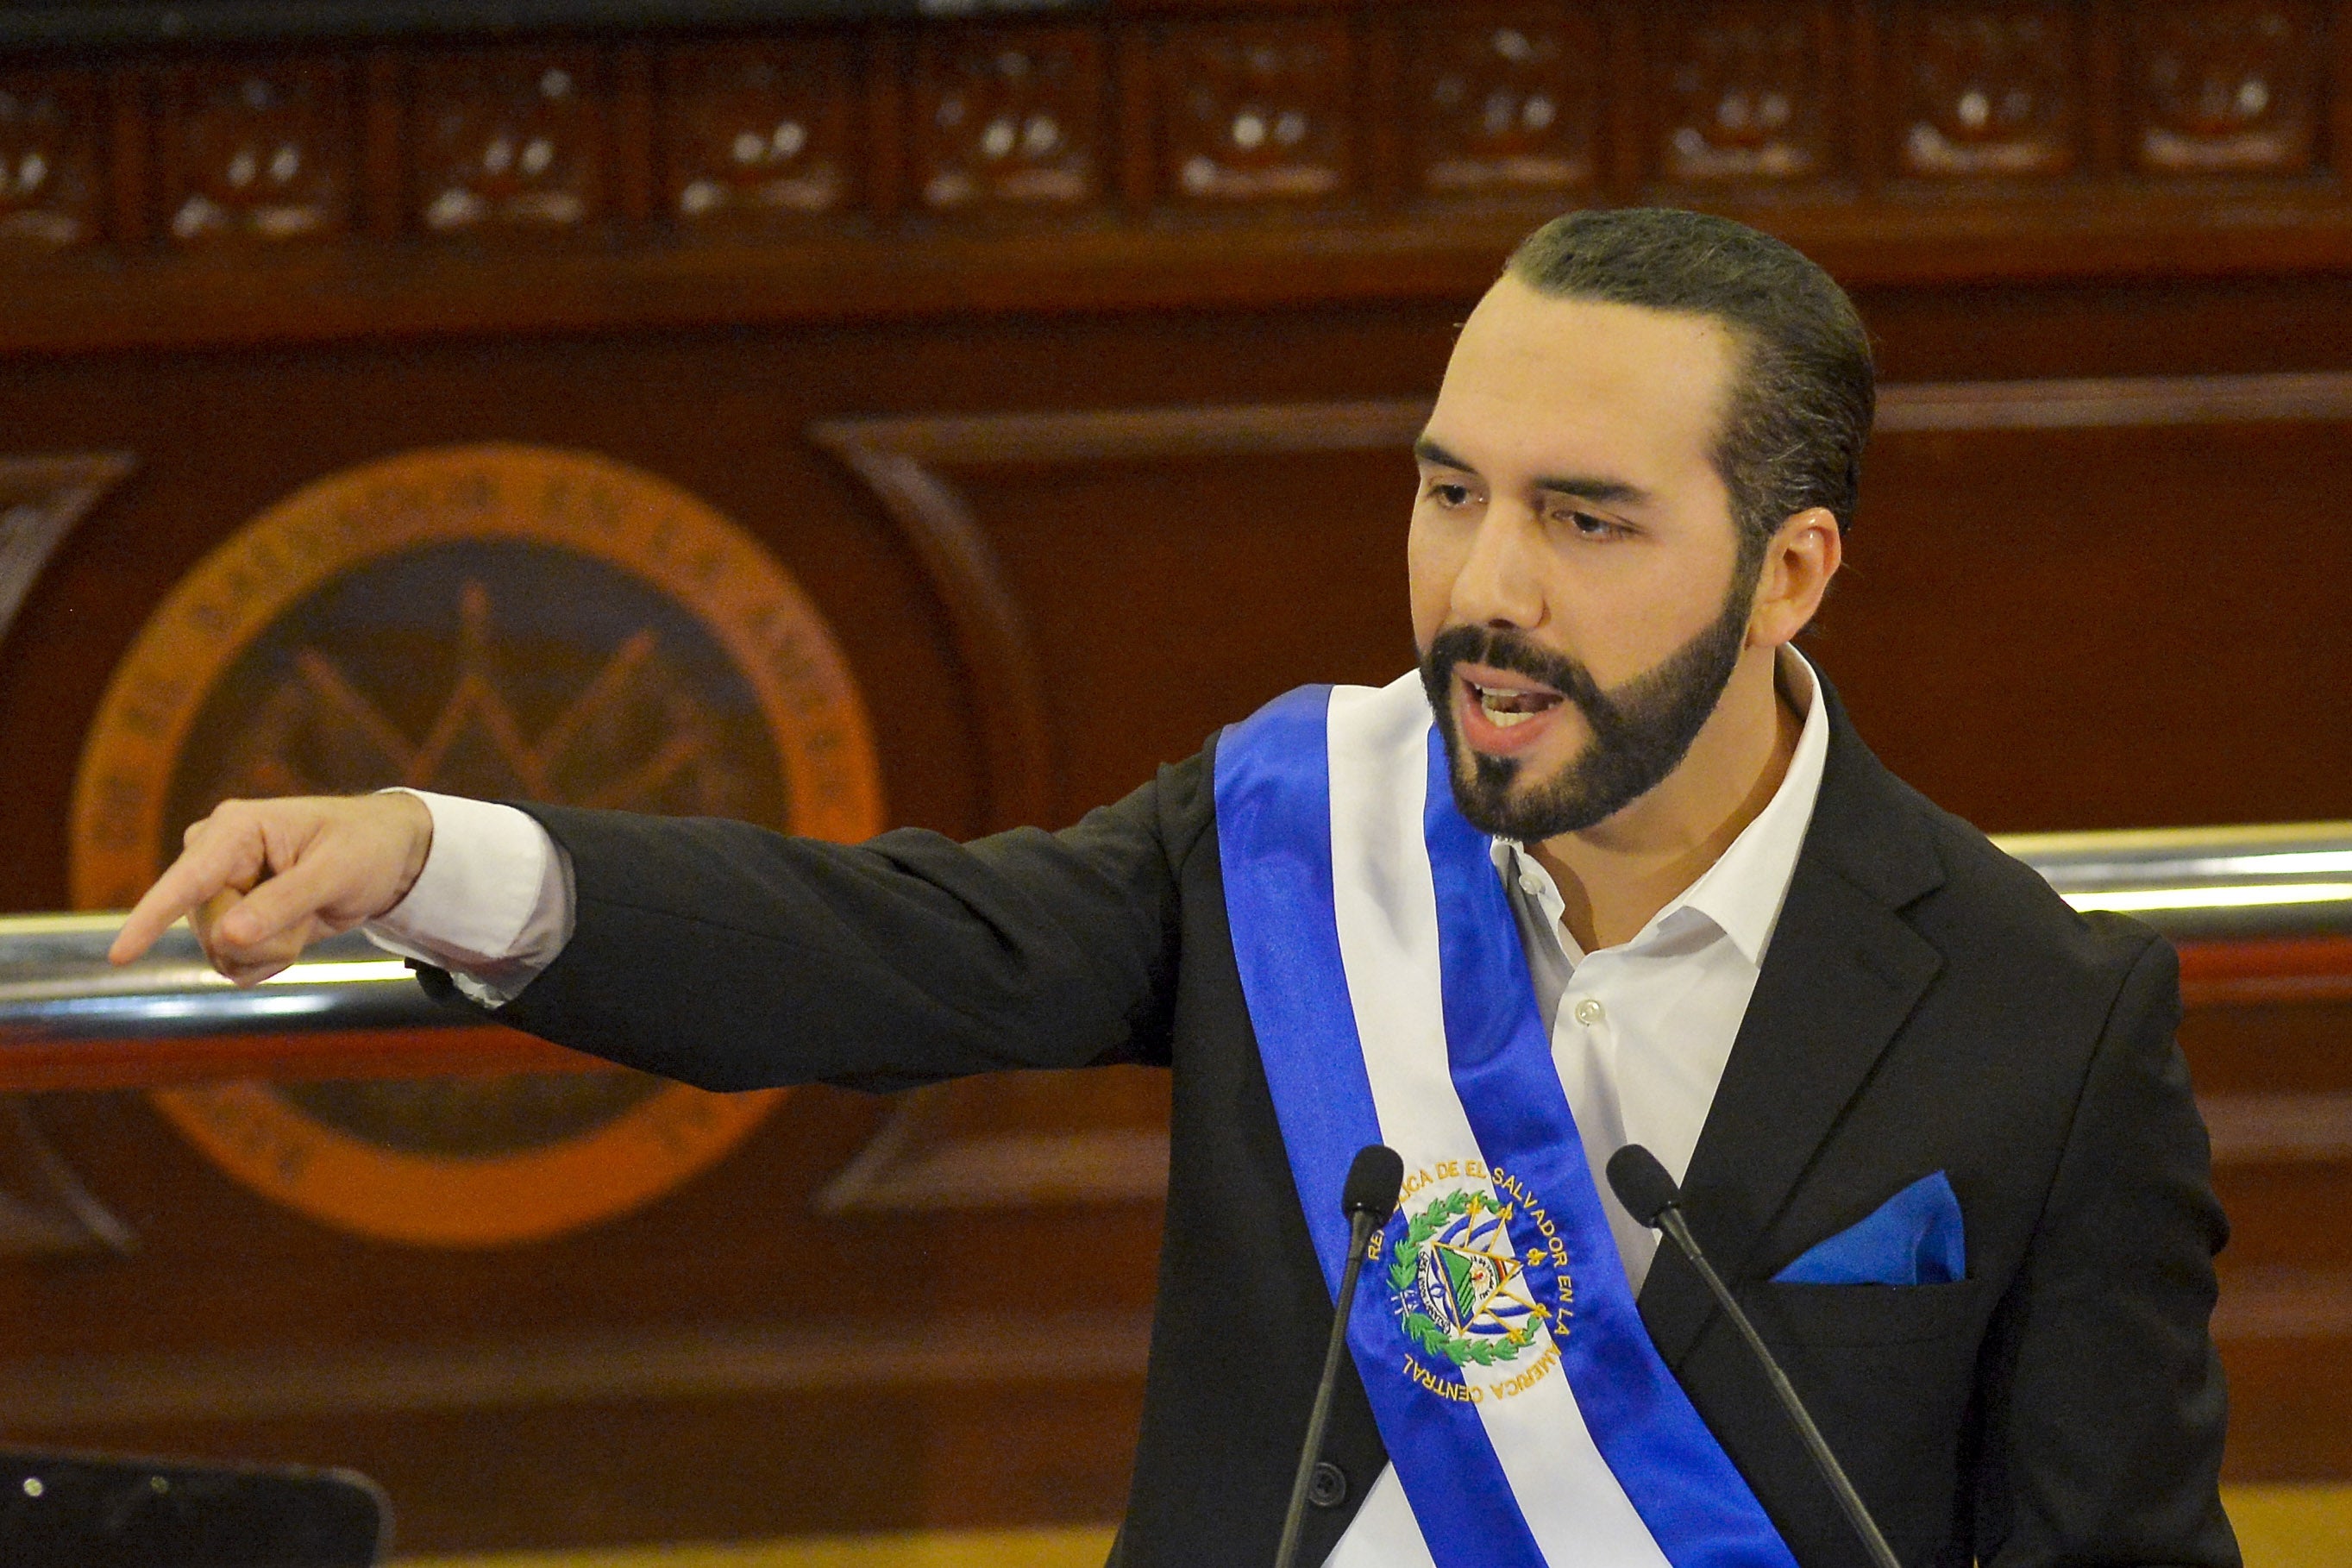 Nayib Bukele, El Salvador's president, delivers a speech to Congress at the Legislative Assembly building in San Salvador, El Salvador, on Tuesday, June 1, 2021.